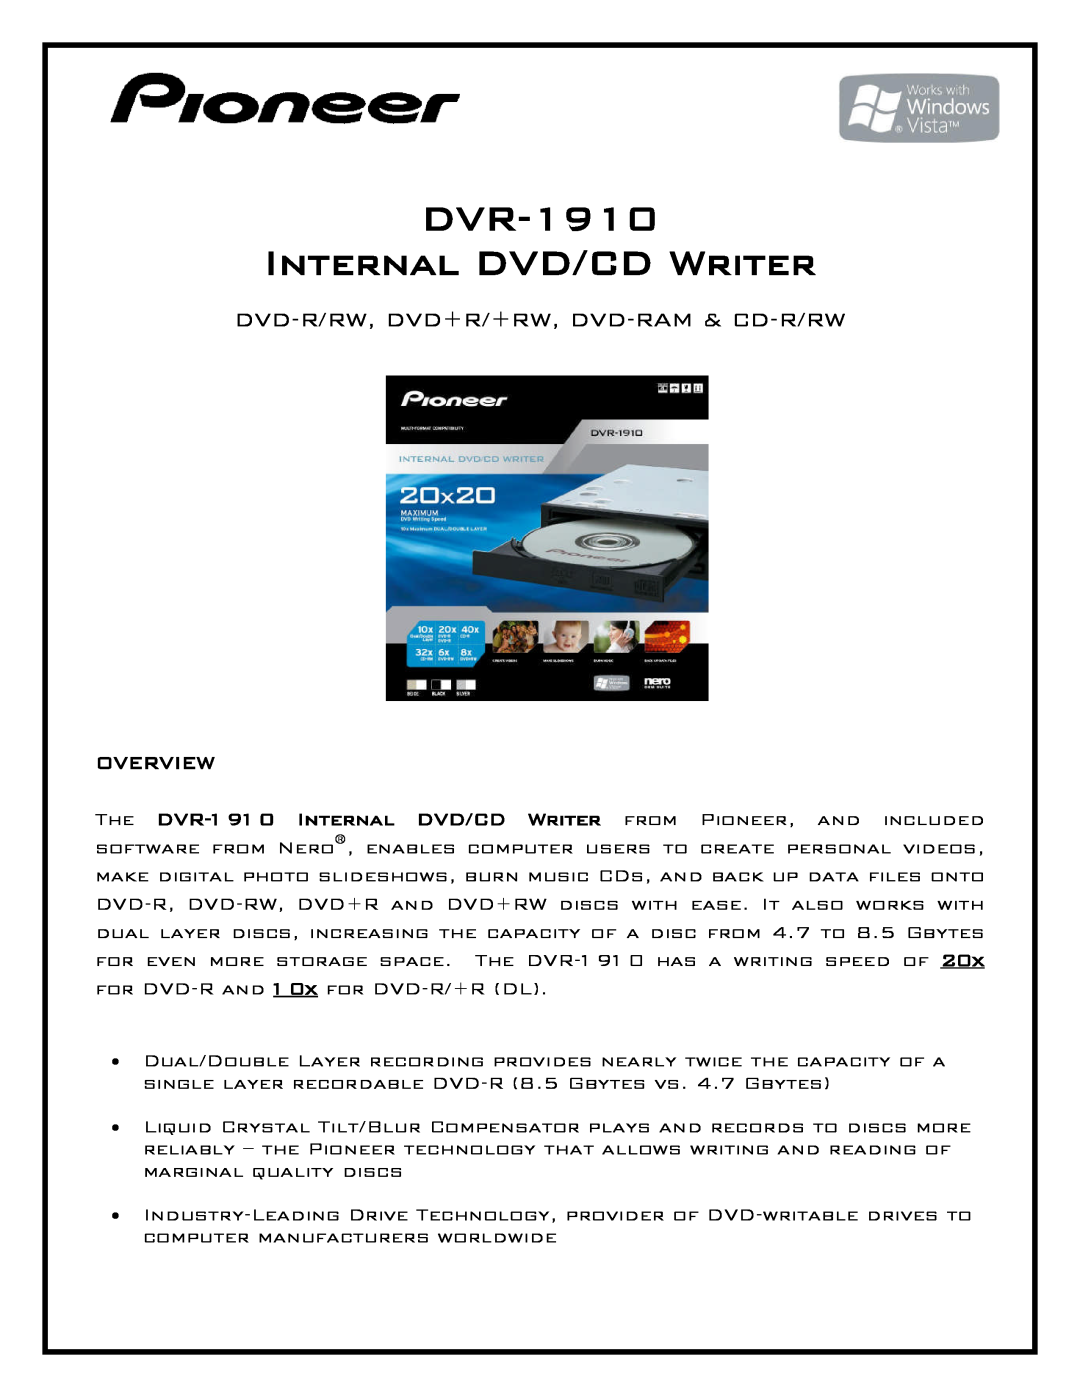 Pioneer manual DVR-1910 Internal DVD/CD Writer, Dvd-R/Rw, Dvd+R/+Rw, Dvd-Ram & Cd-R/Rw, Overview 